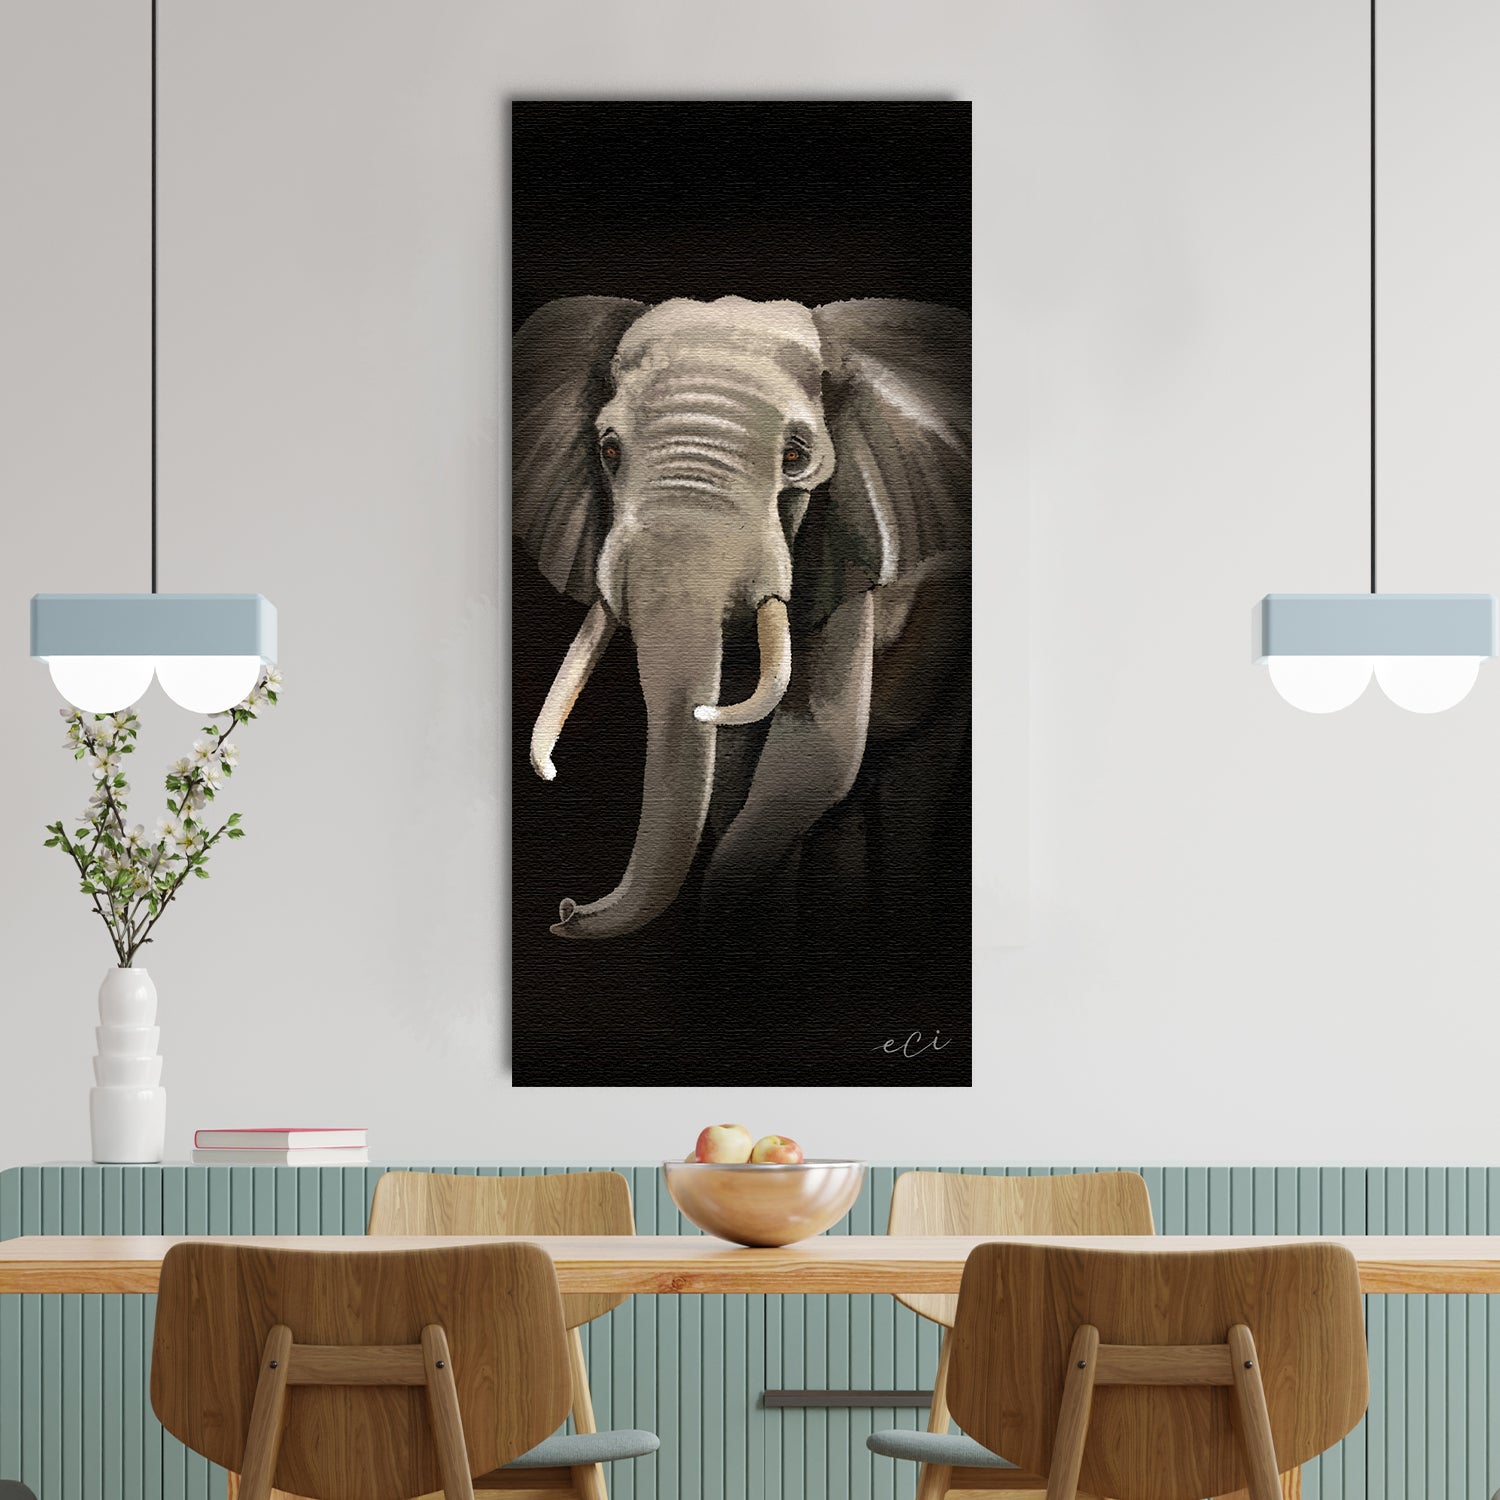 Elephant Canvas Wall Painting Digital Printed Animal Art 2